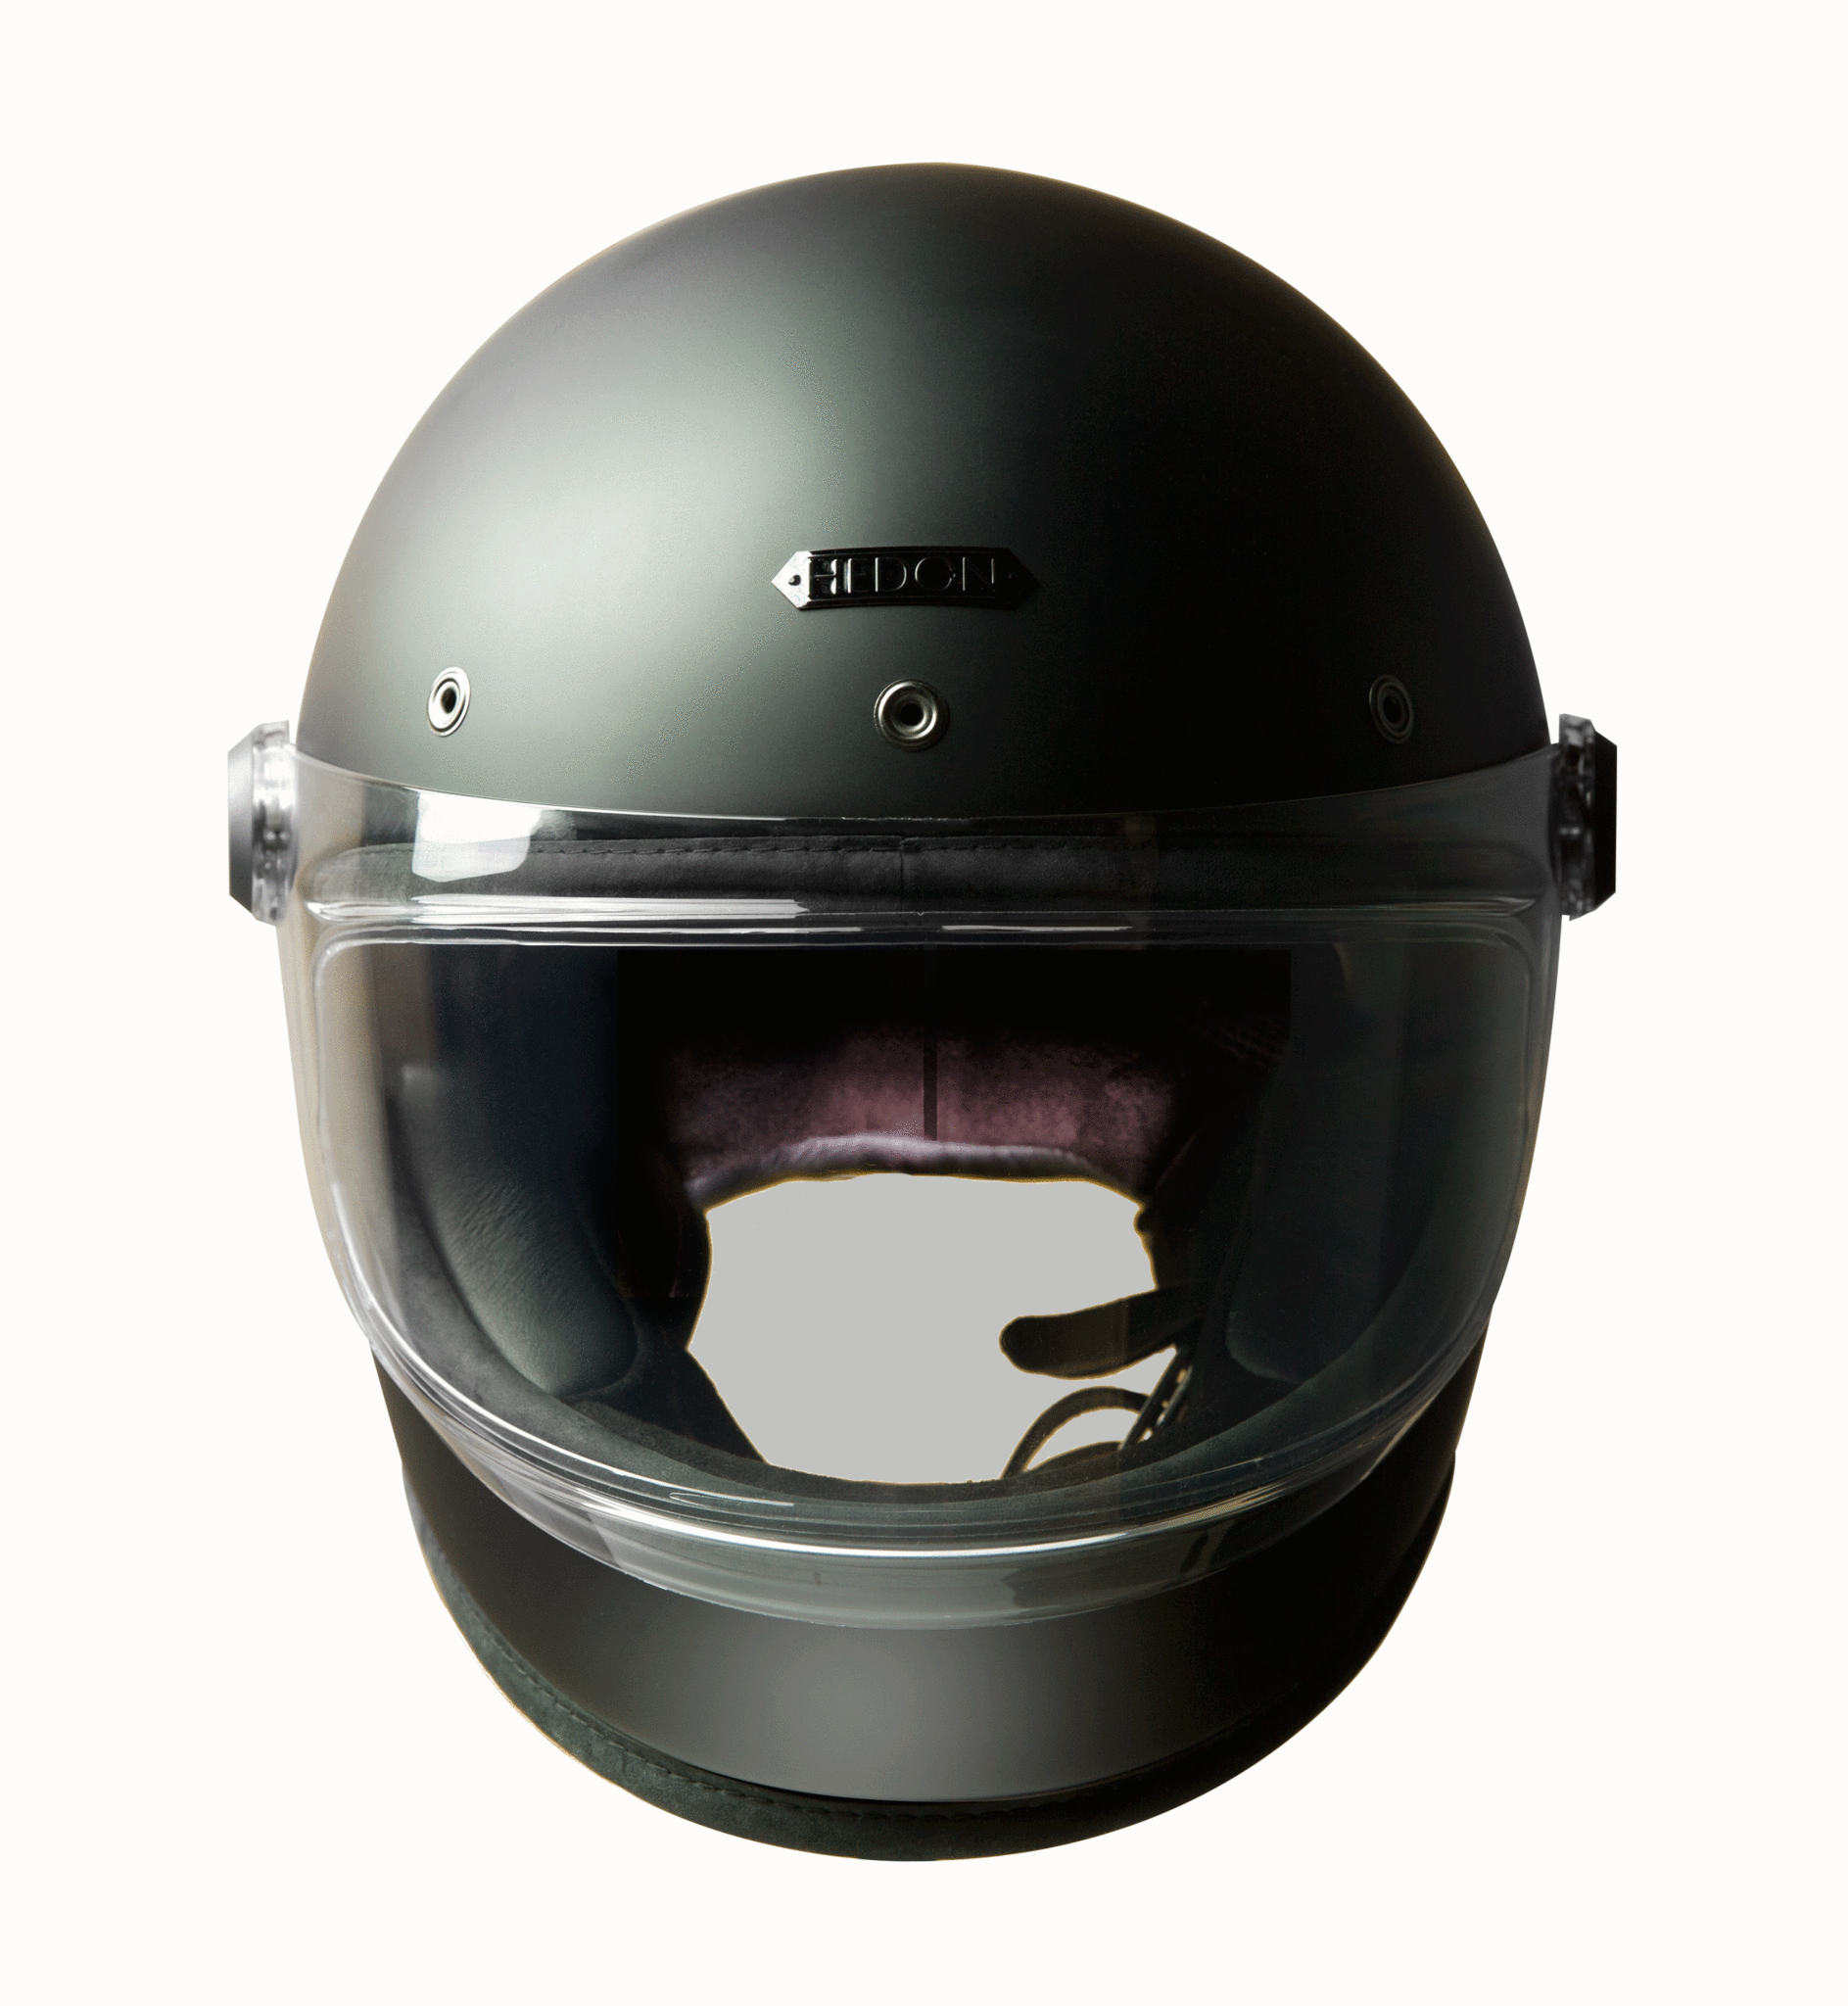 Hedon Heroine coal motorcycle helmet